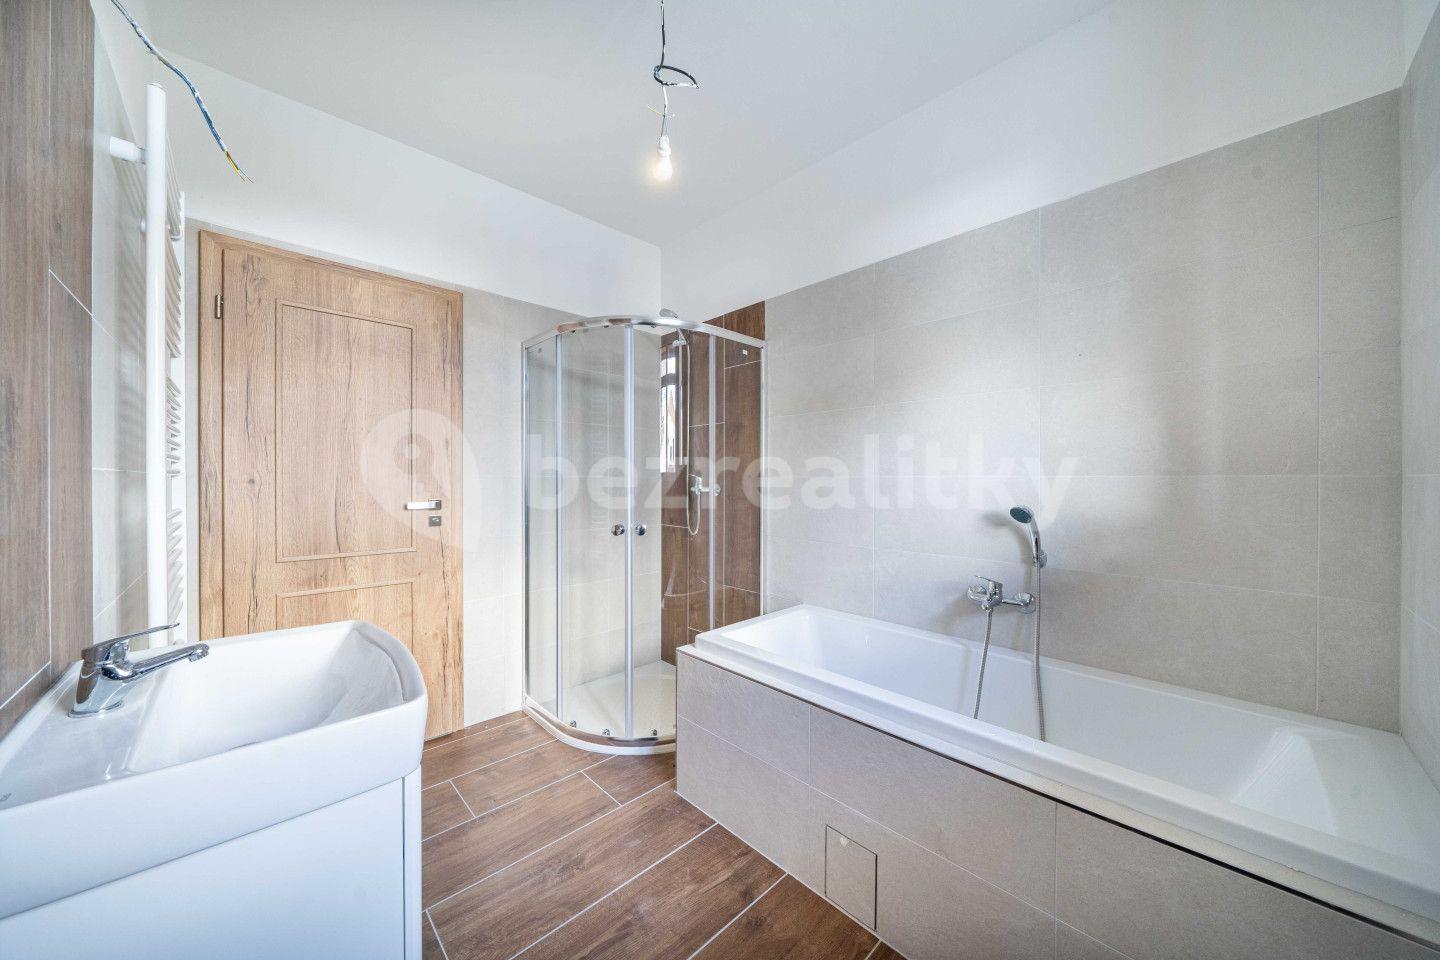 2 bedroom with open-plan kitchen flat for sale, 100 m², U Stadionu, Kostelec, Plzeňský Region